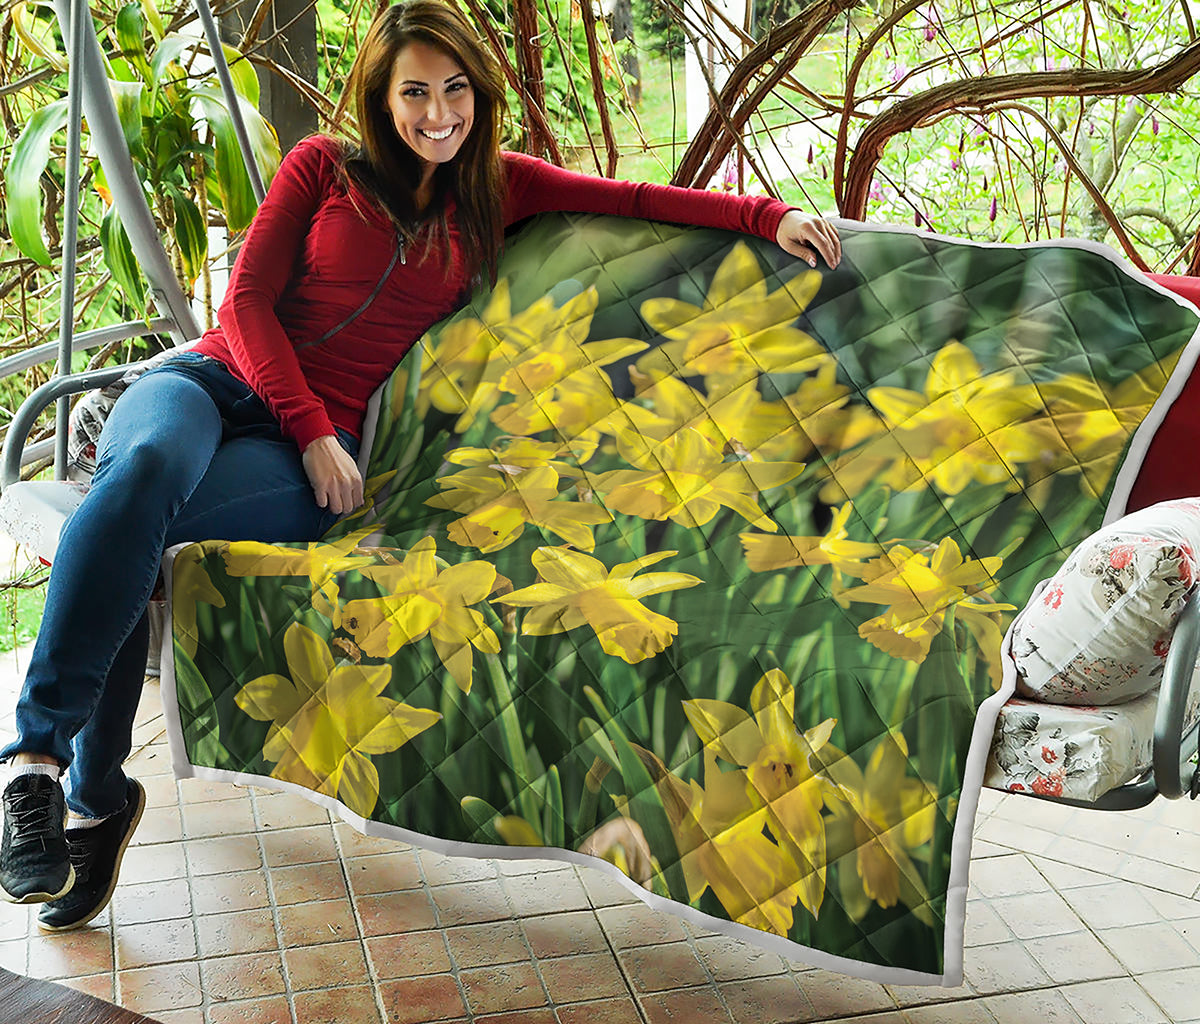 Yellow Daffodil Flower Print Quilt